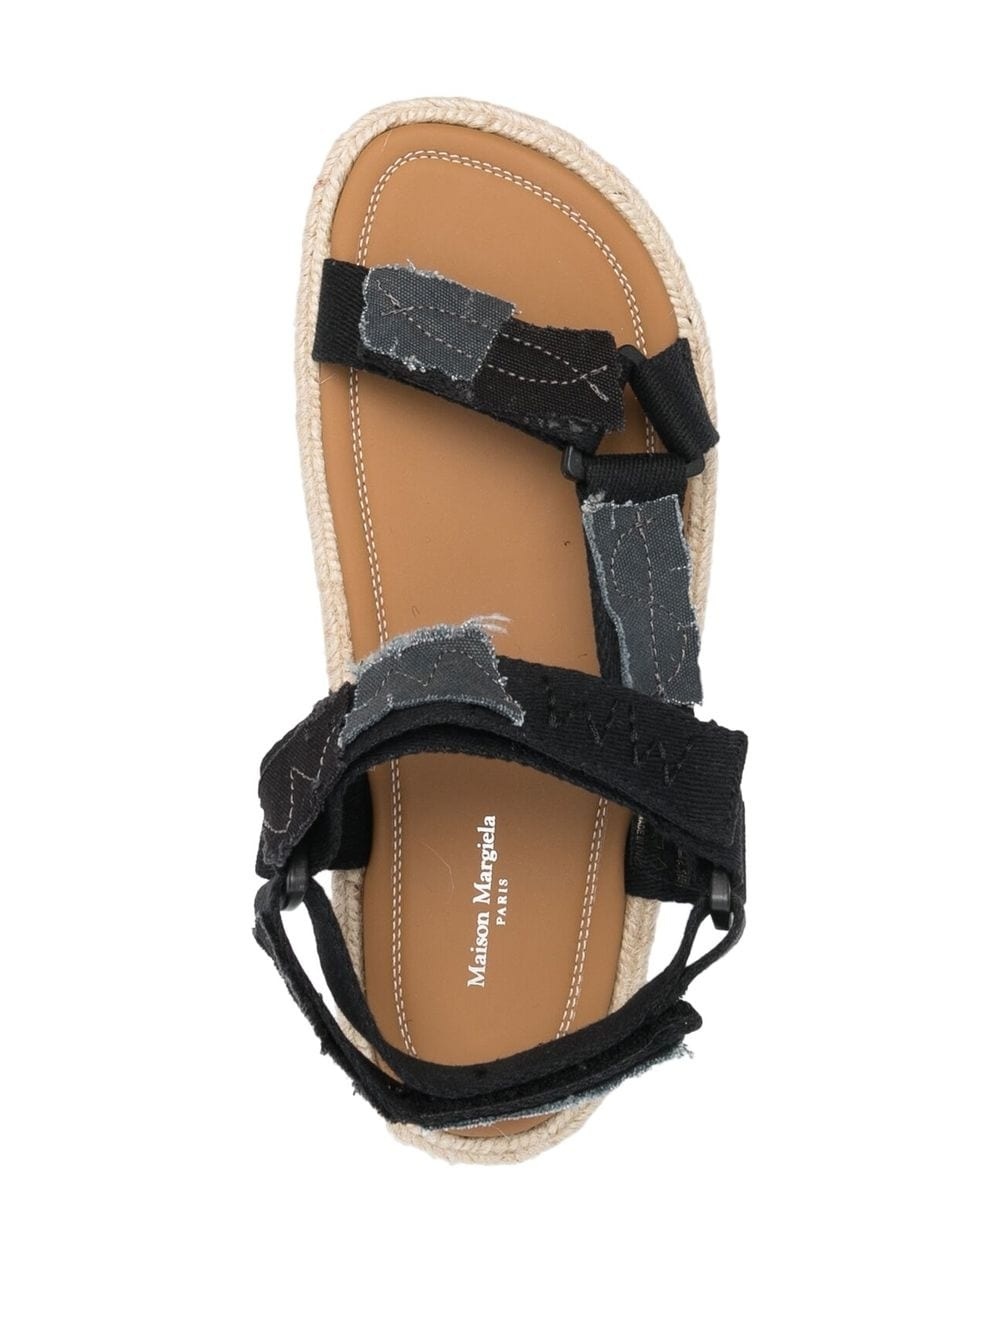 threadbare strappy sandals - 4